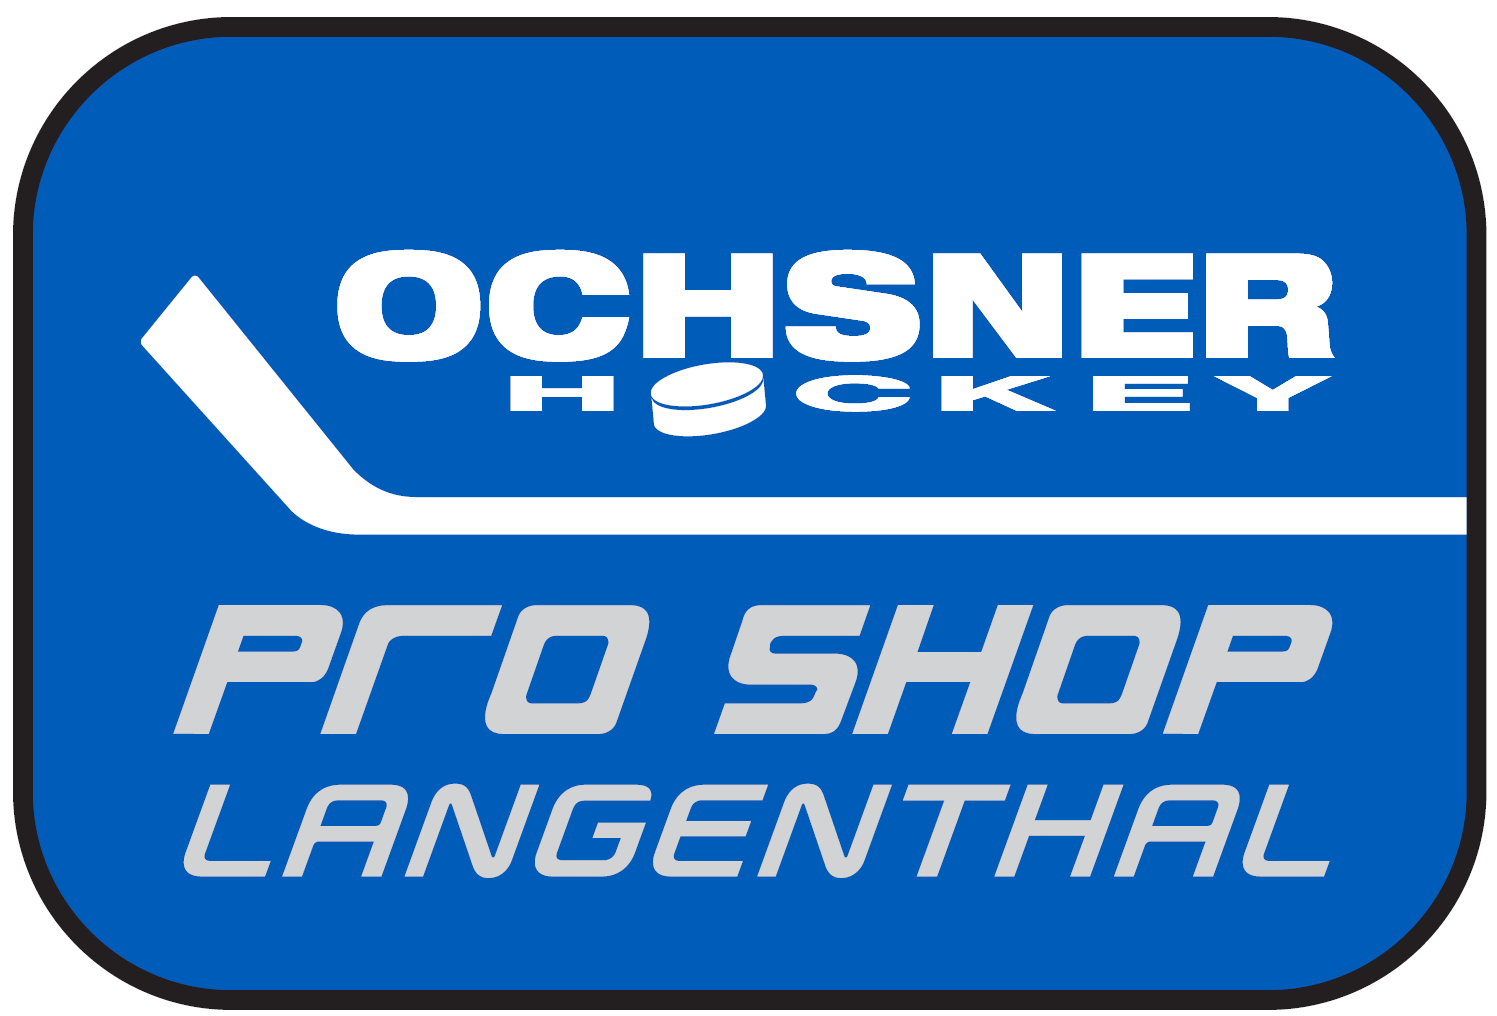 Pro Shop Langenthal